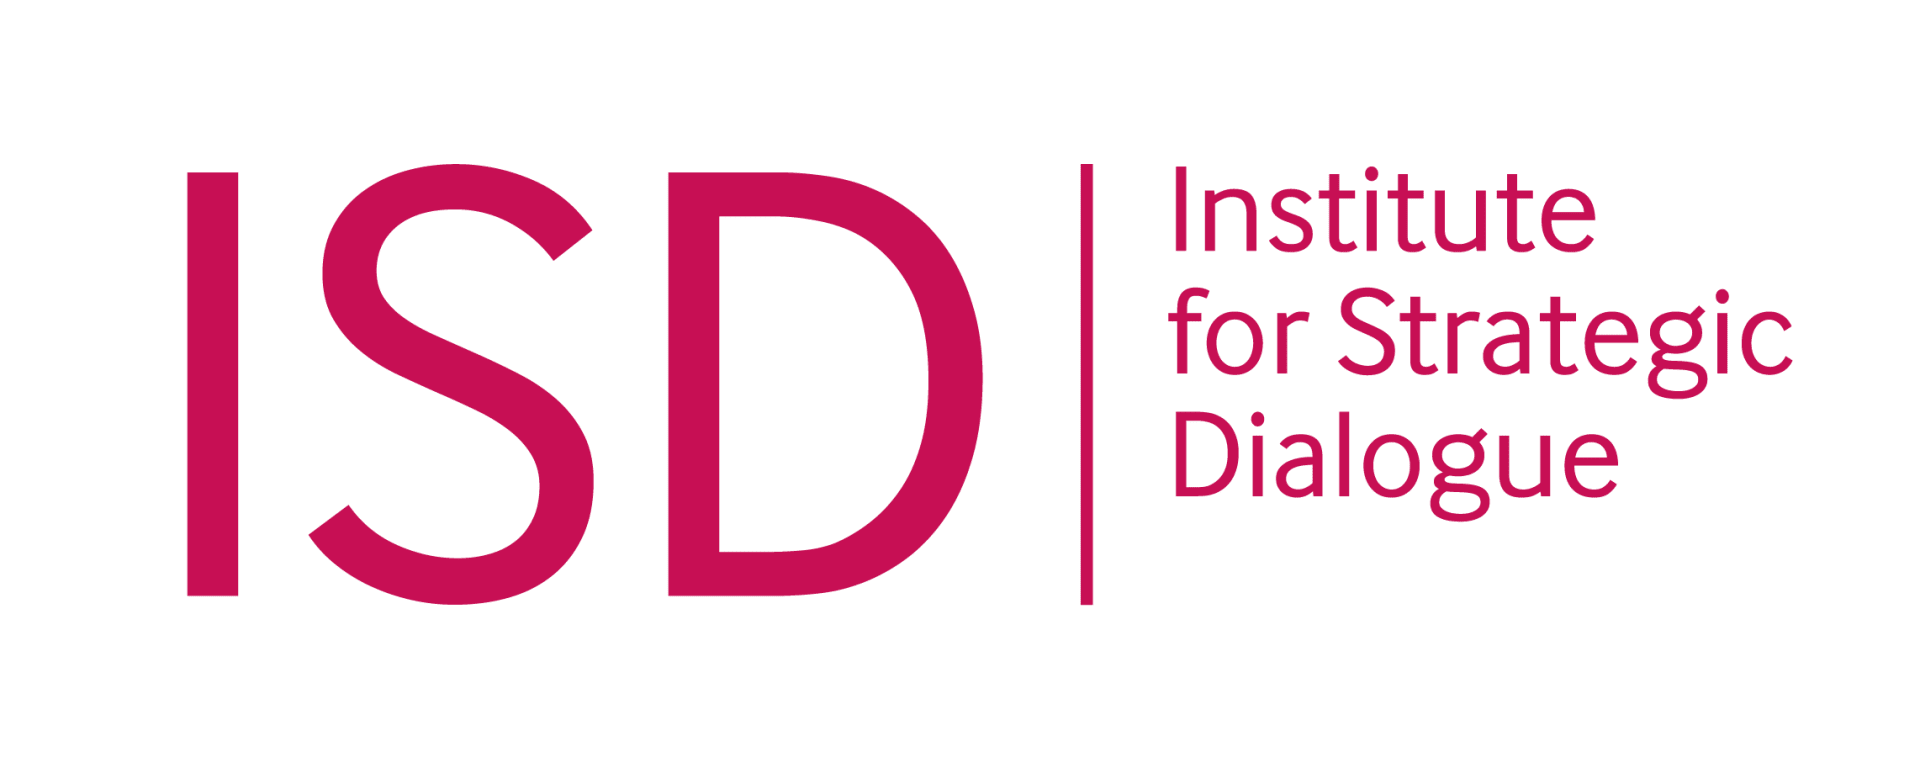 Institute for Strategic Dialogue (ISD) logo